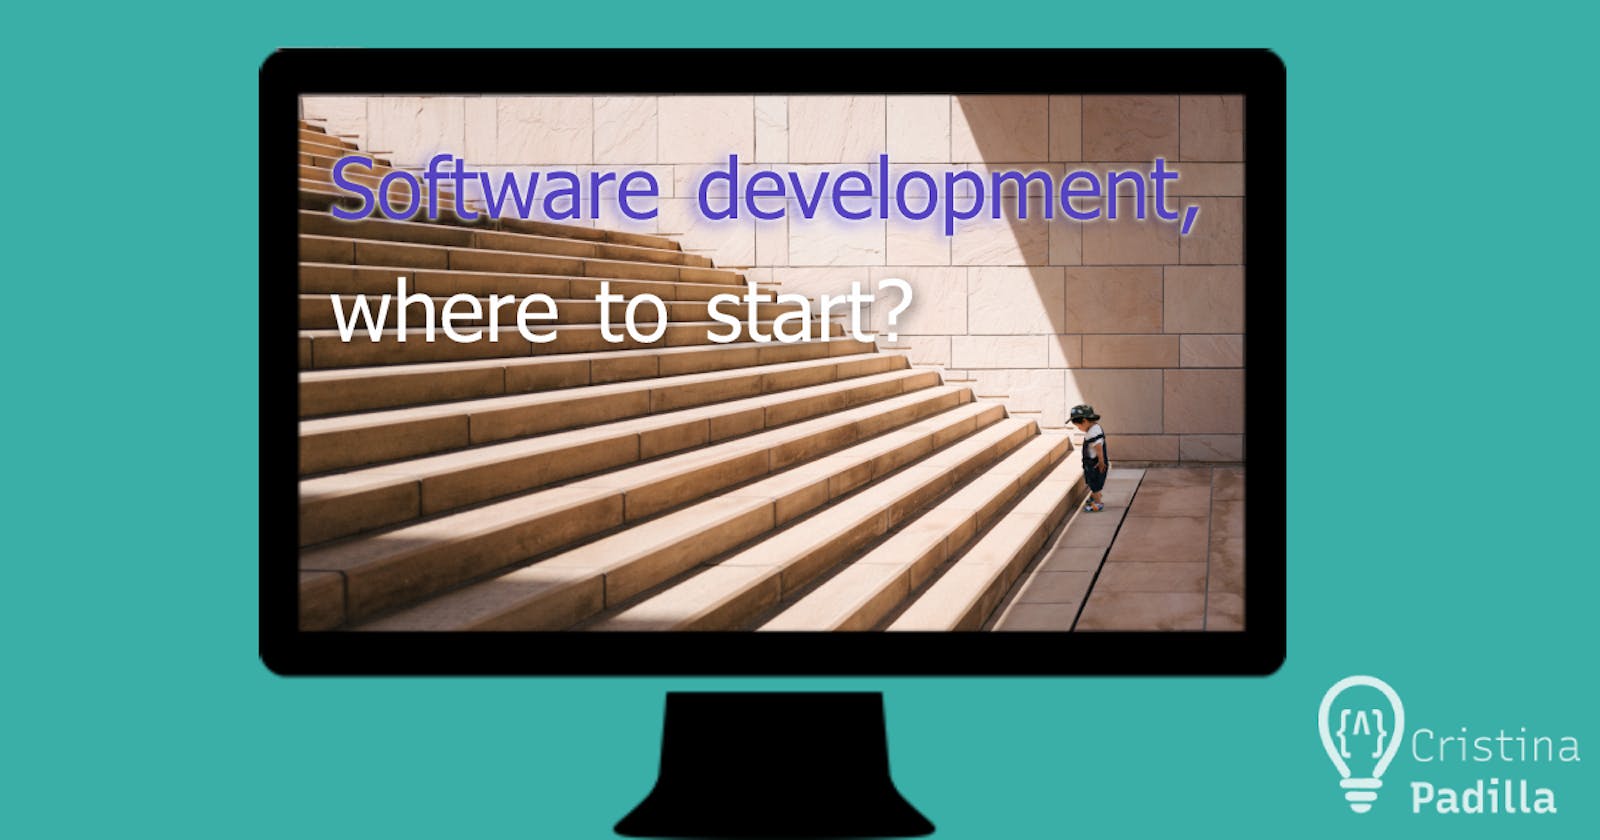 Software development, where to start?